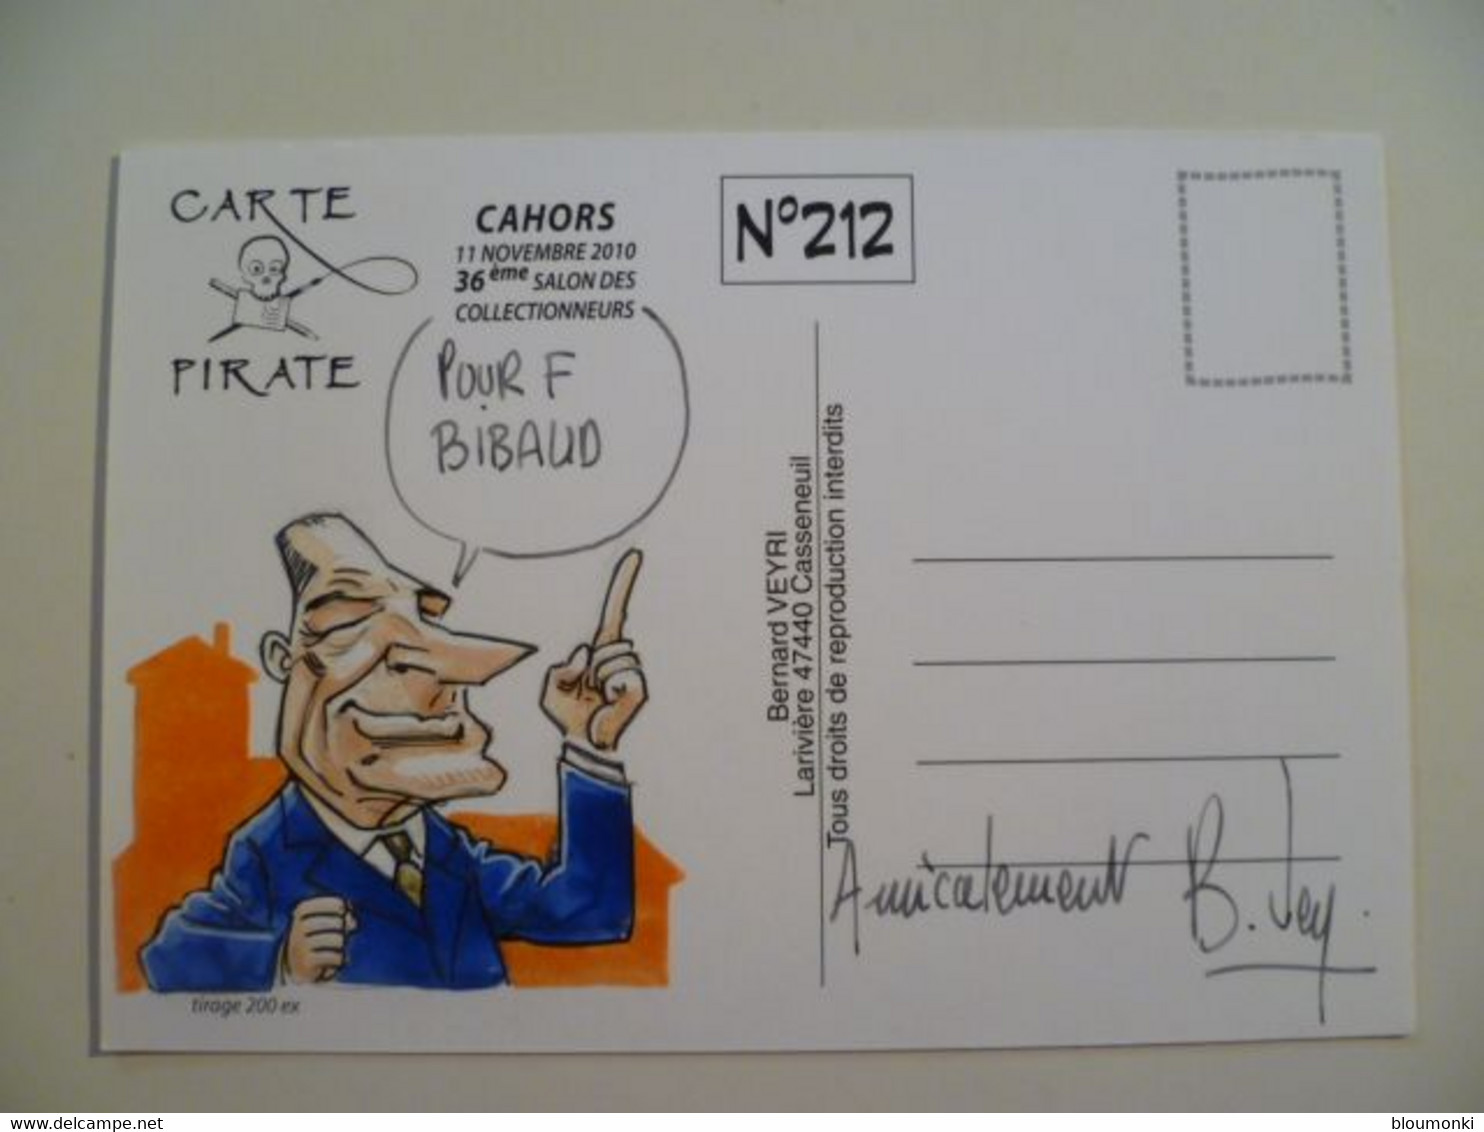 Carte Postale Illustrateur Bernard VEYRI / Dessin Unique Dédicace F Bibaud /  CAHORS Carte Pirate Jacques Chirac - Veyri, Bernard